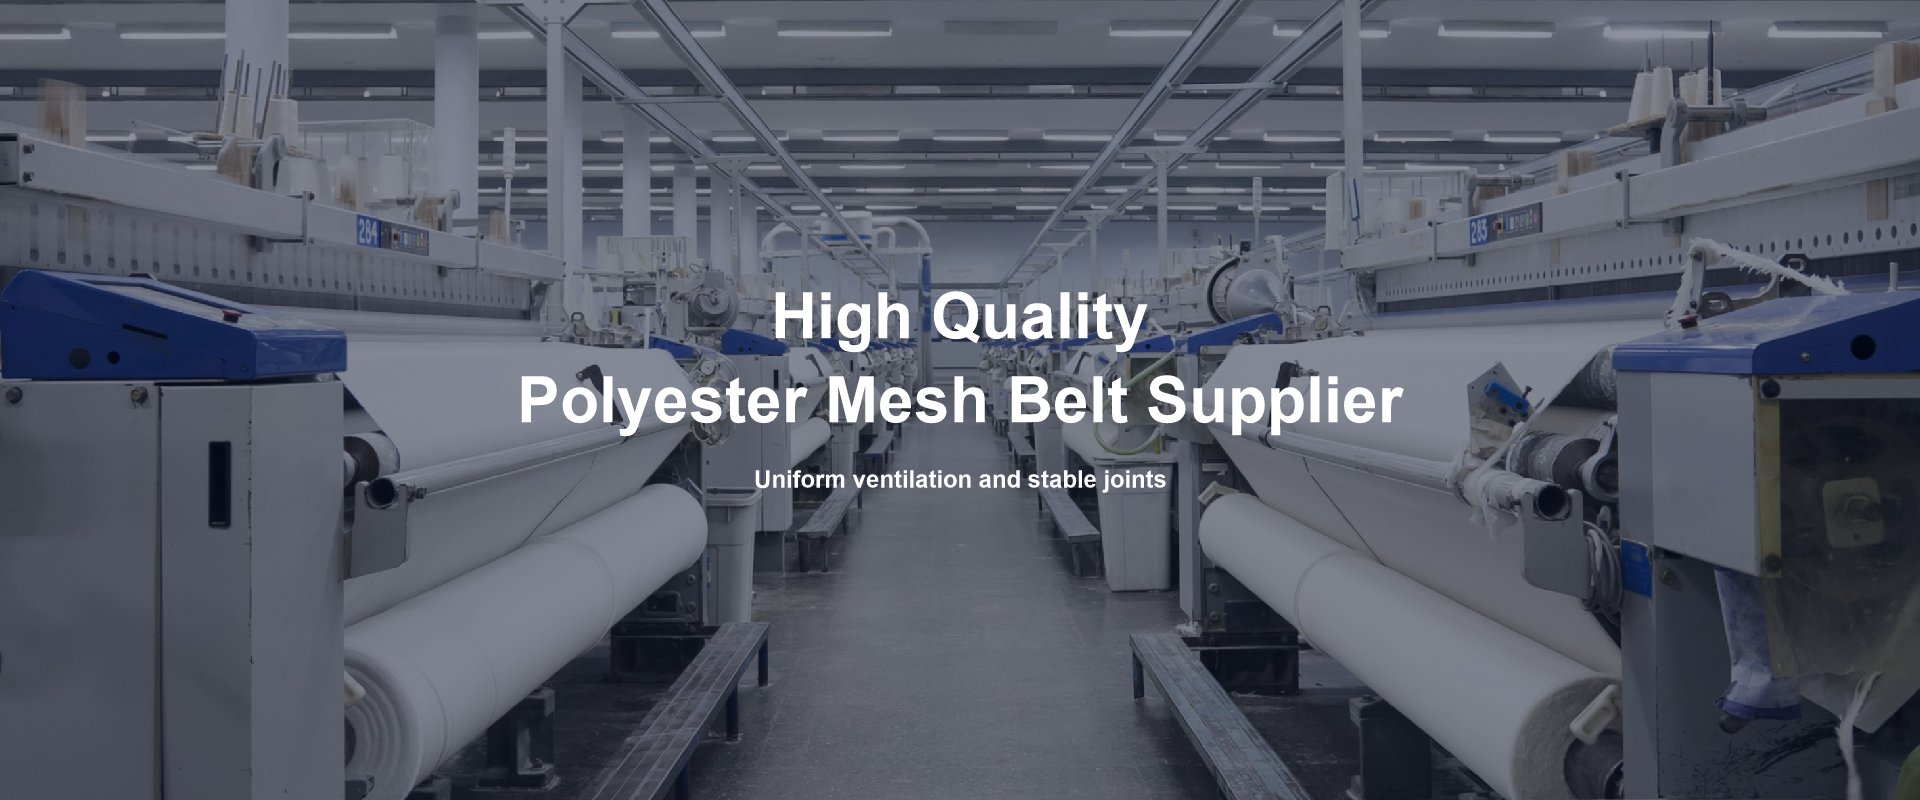 High Quality Polyester Mesh Belt Supplier